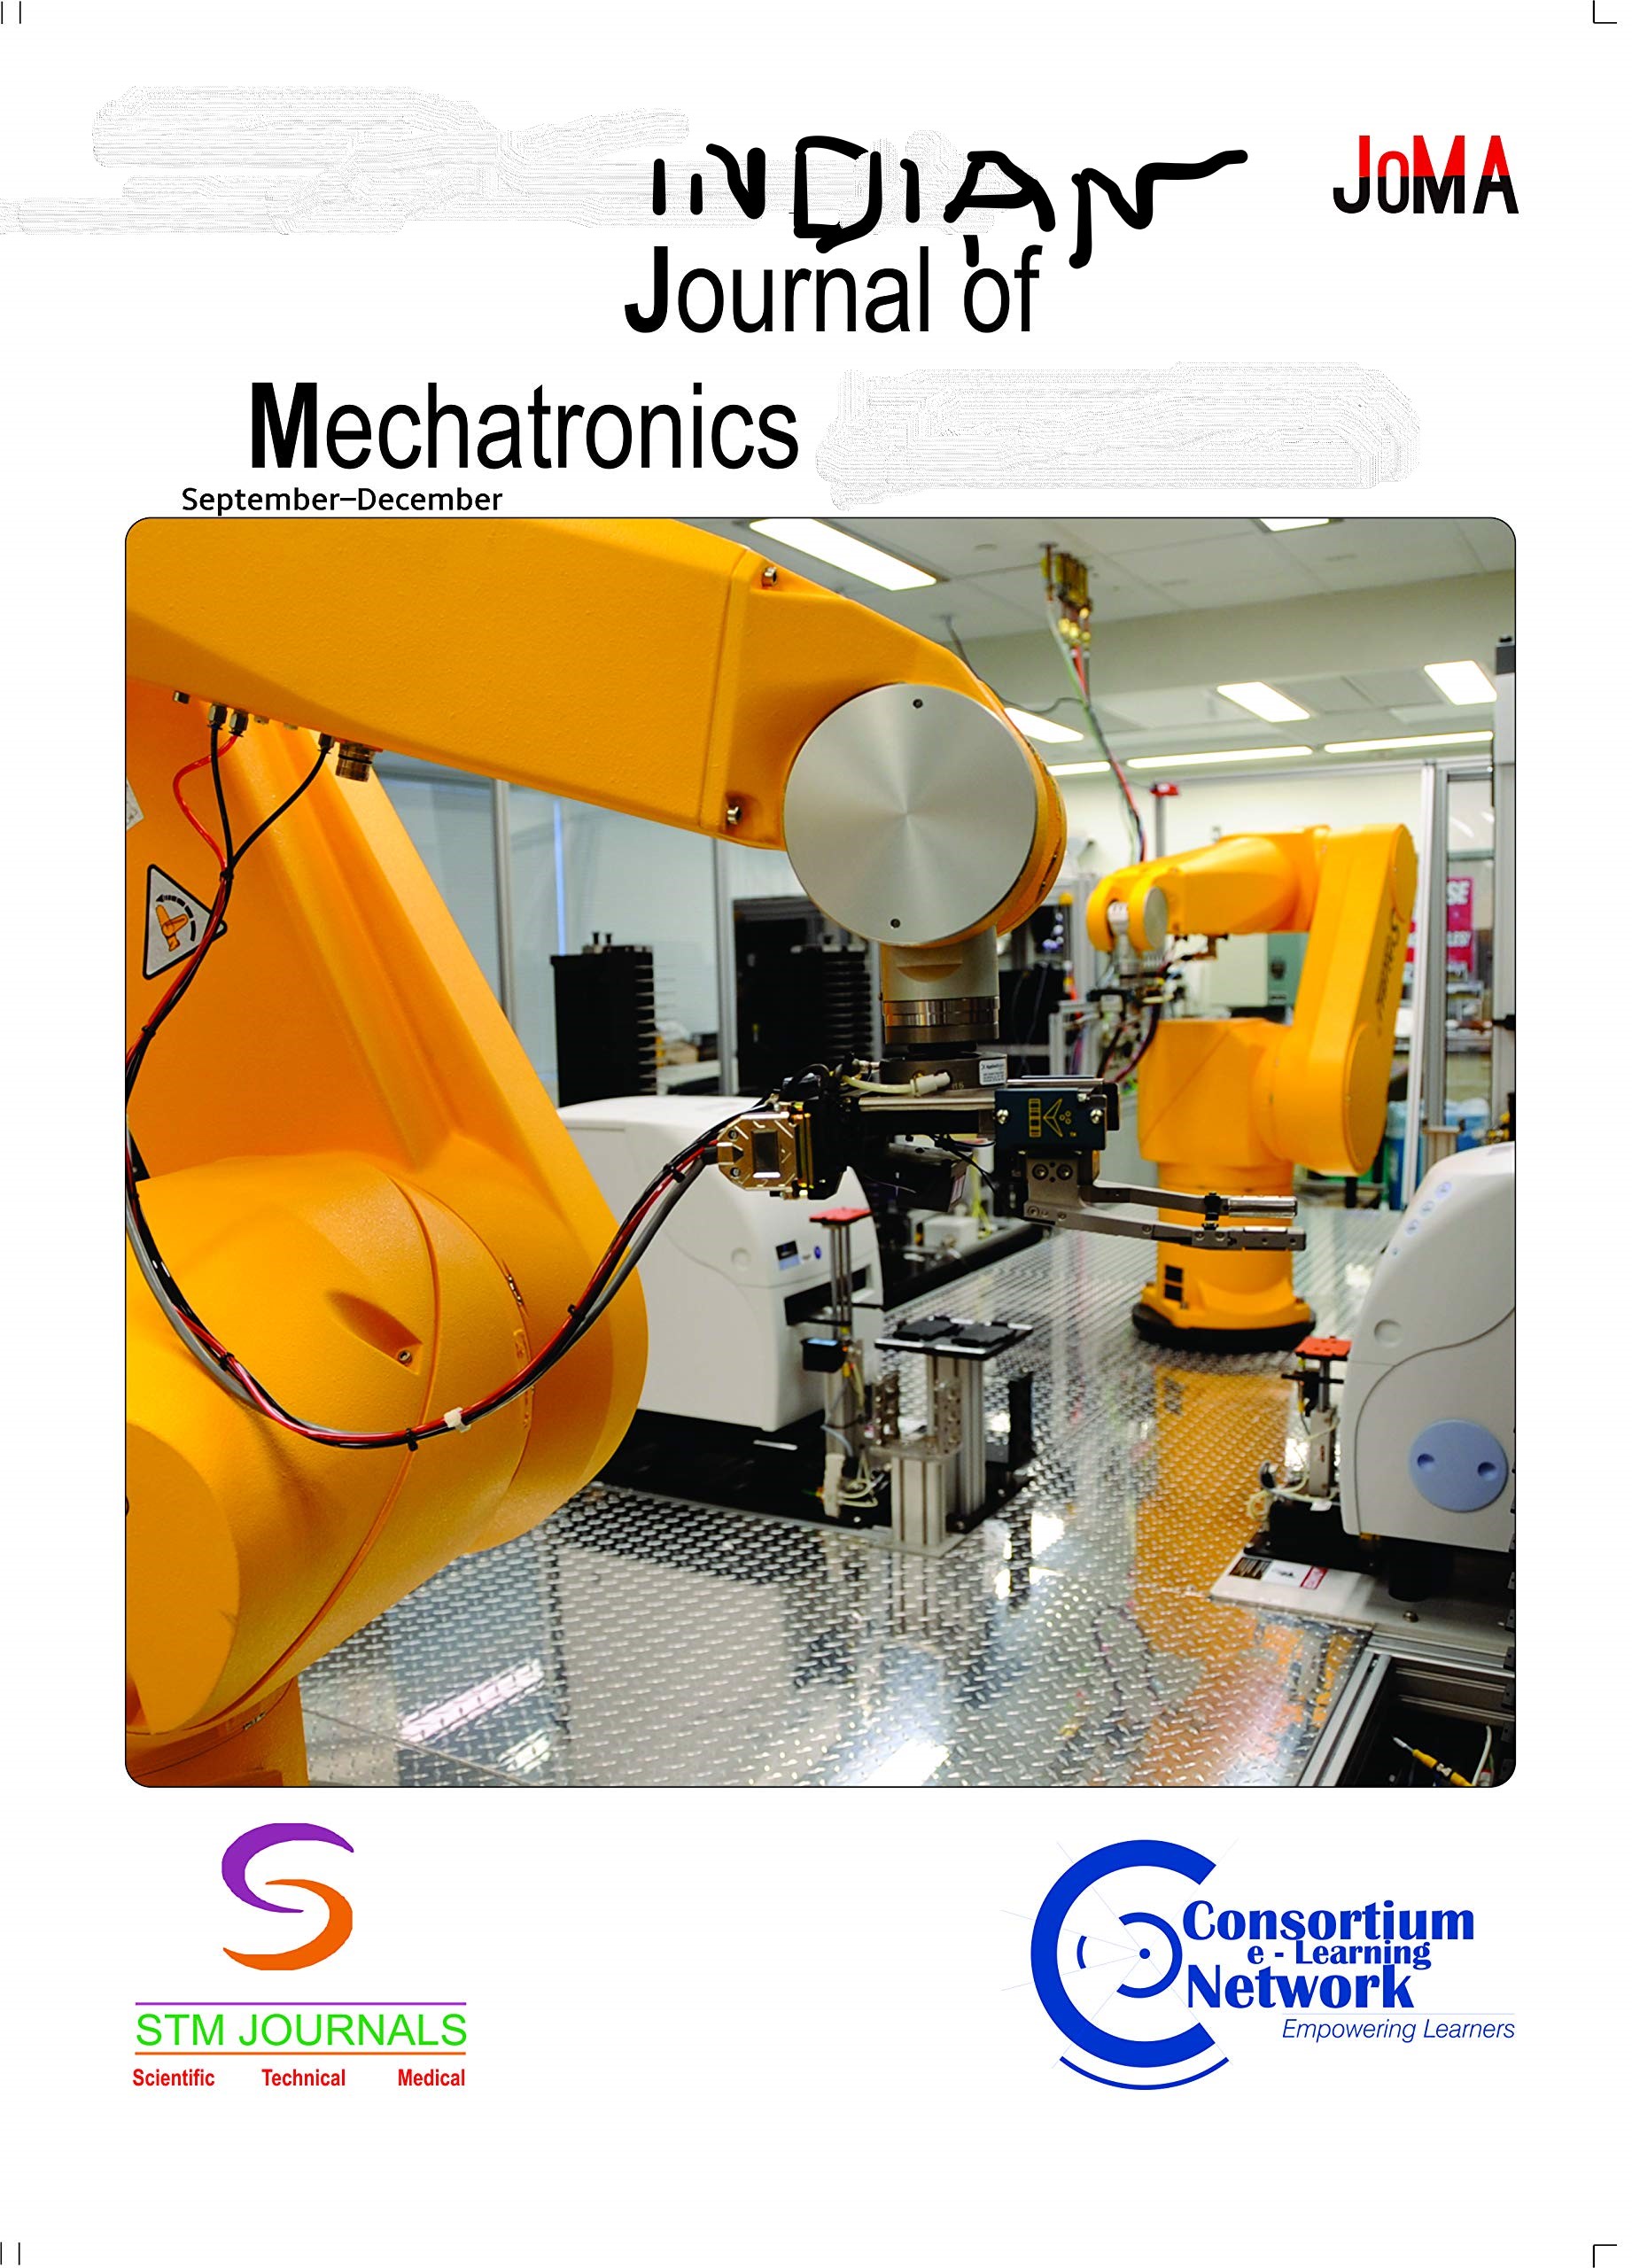 Indian Journal of Mechatronics